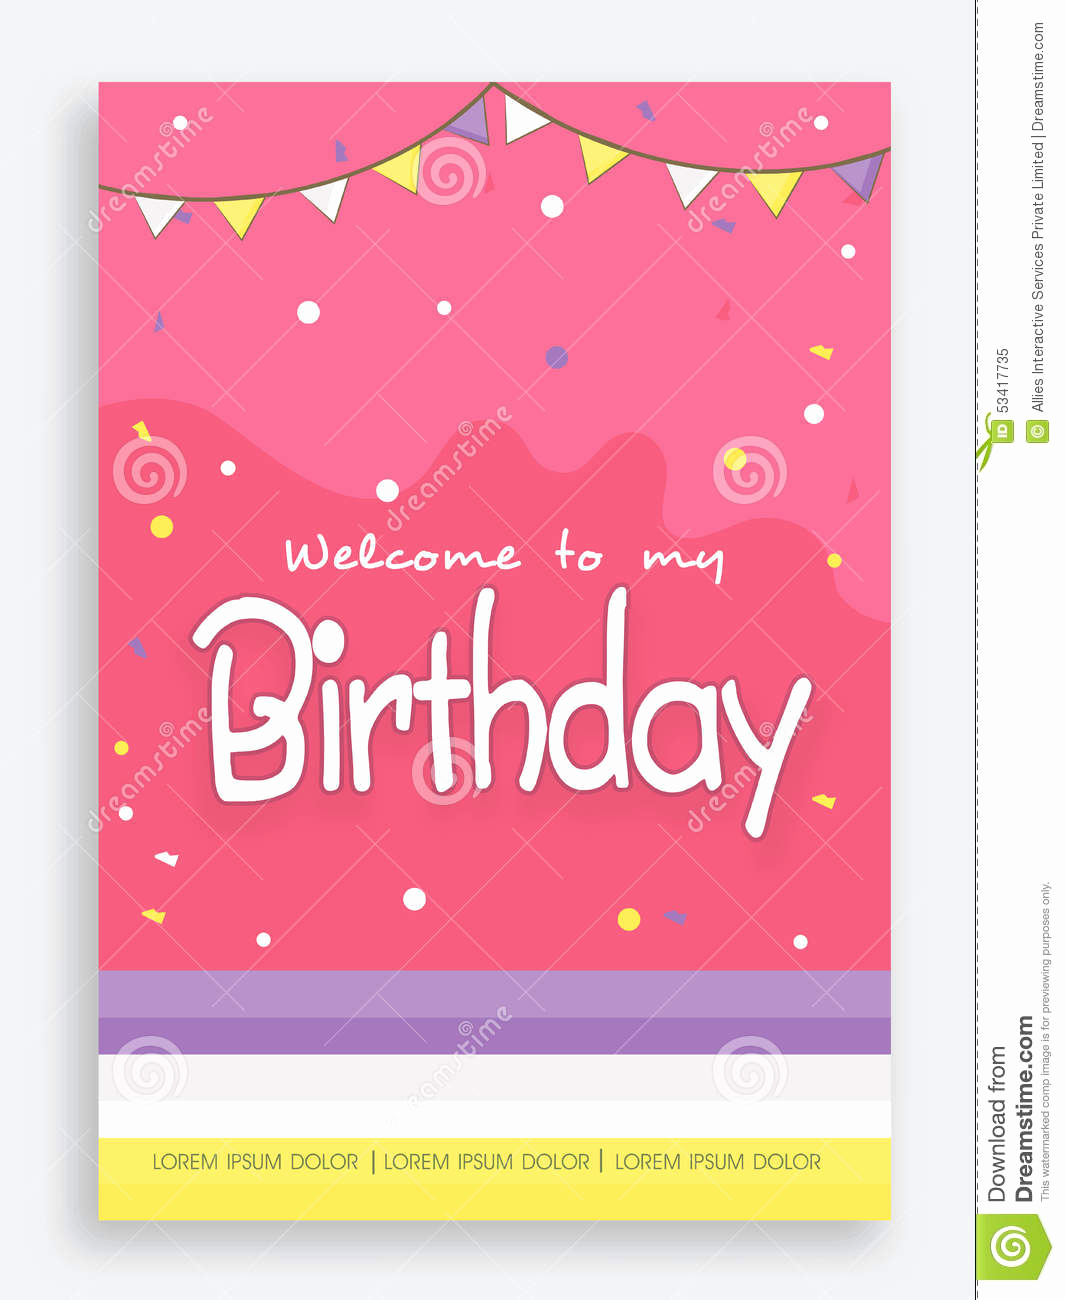 Invitation Card for Birthday Inspirational Invitation Card Design for Birthday Party Stock